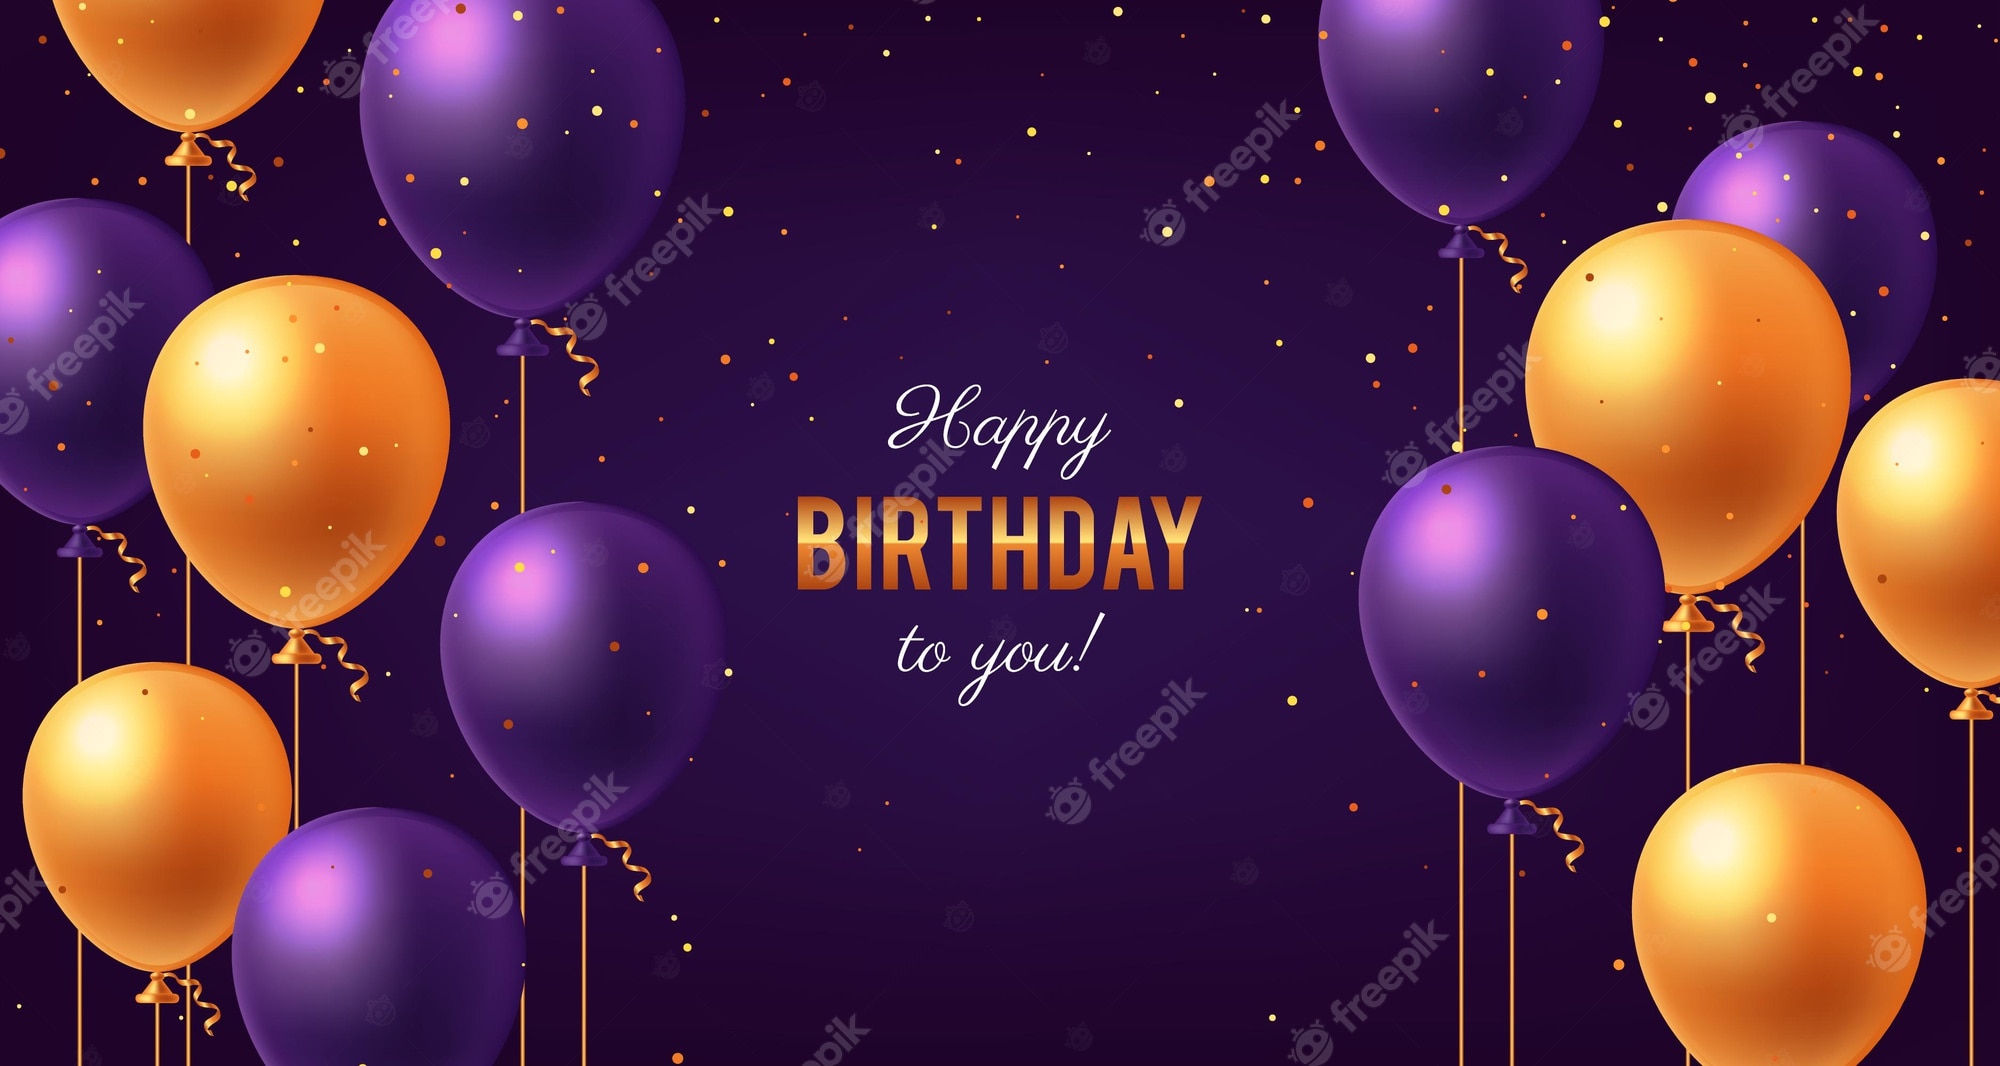 Happy birthday balloons on a purple background - Birthday